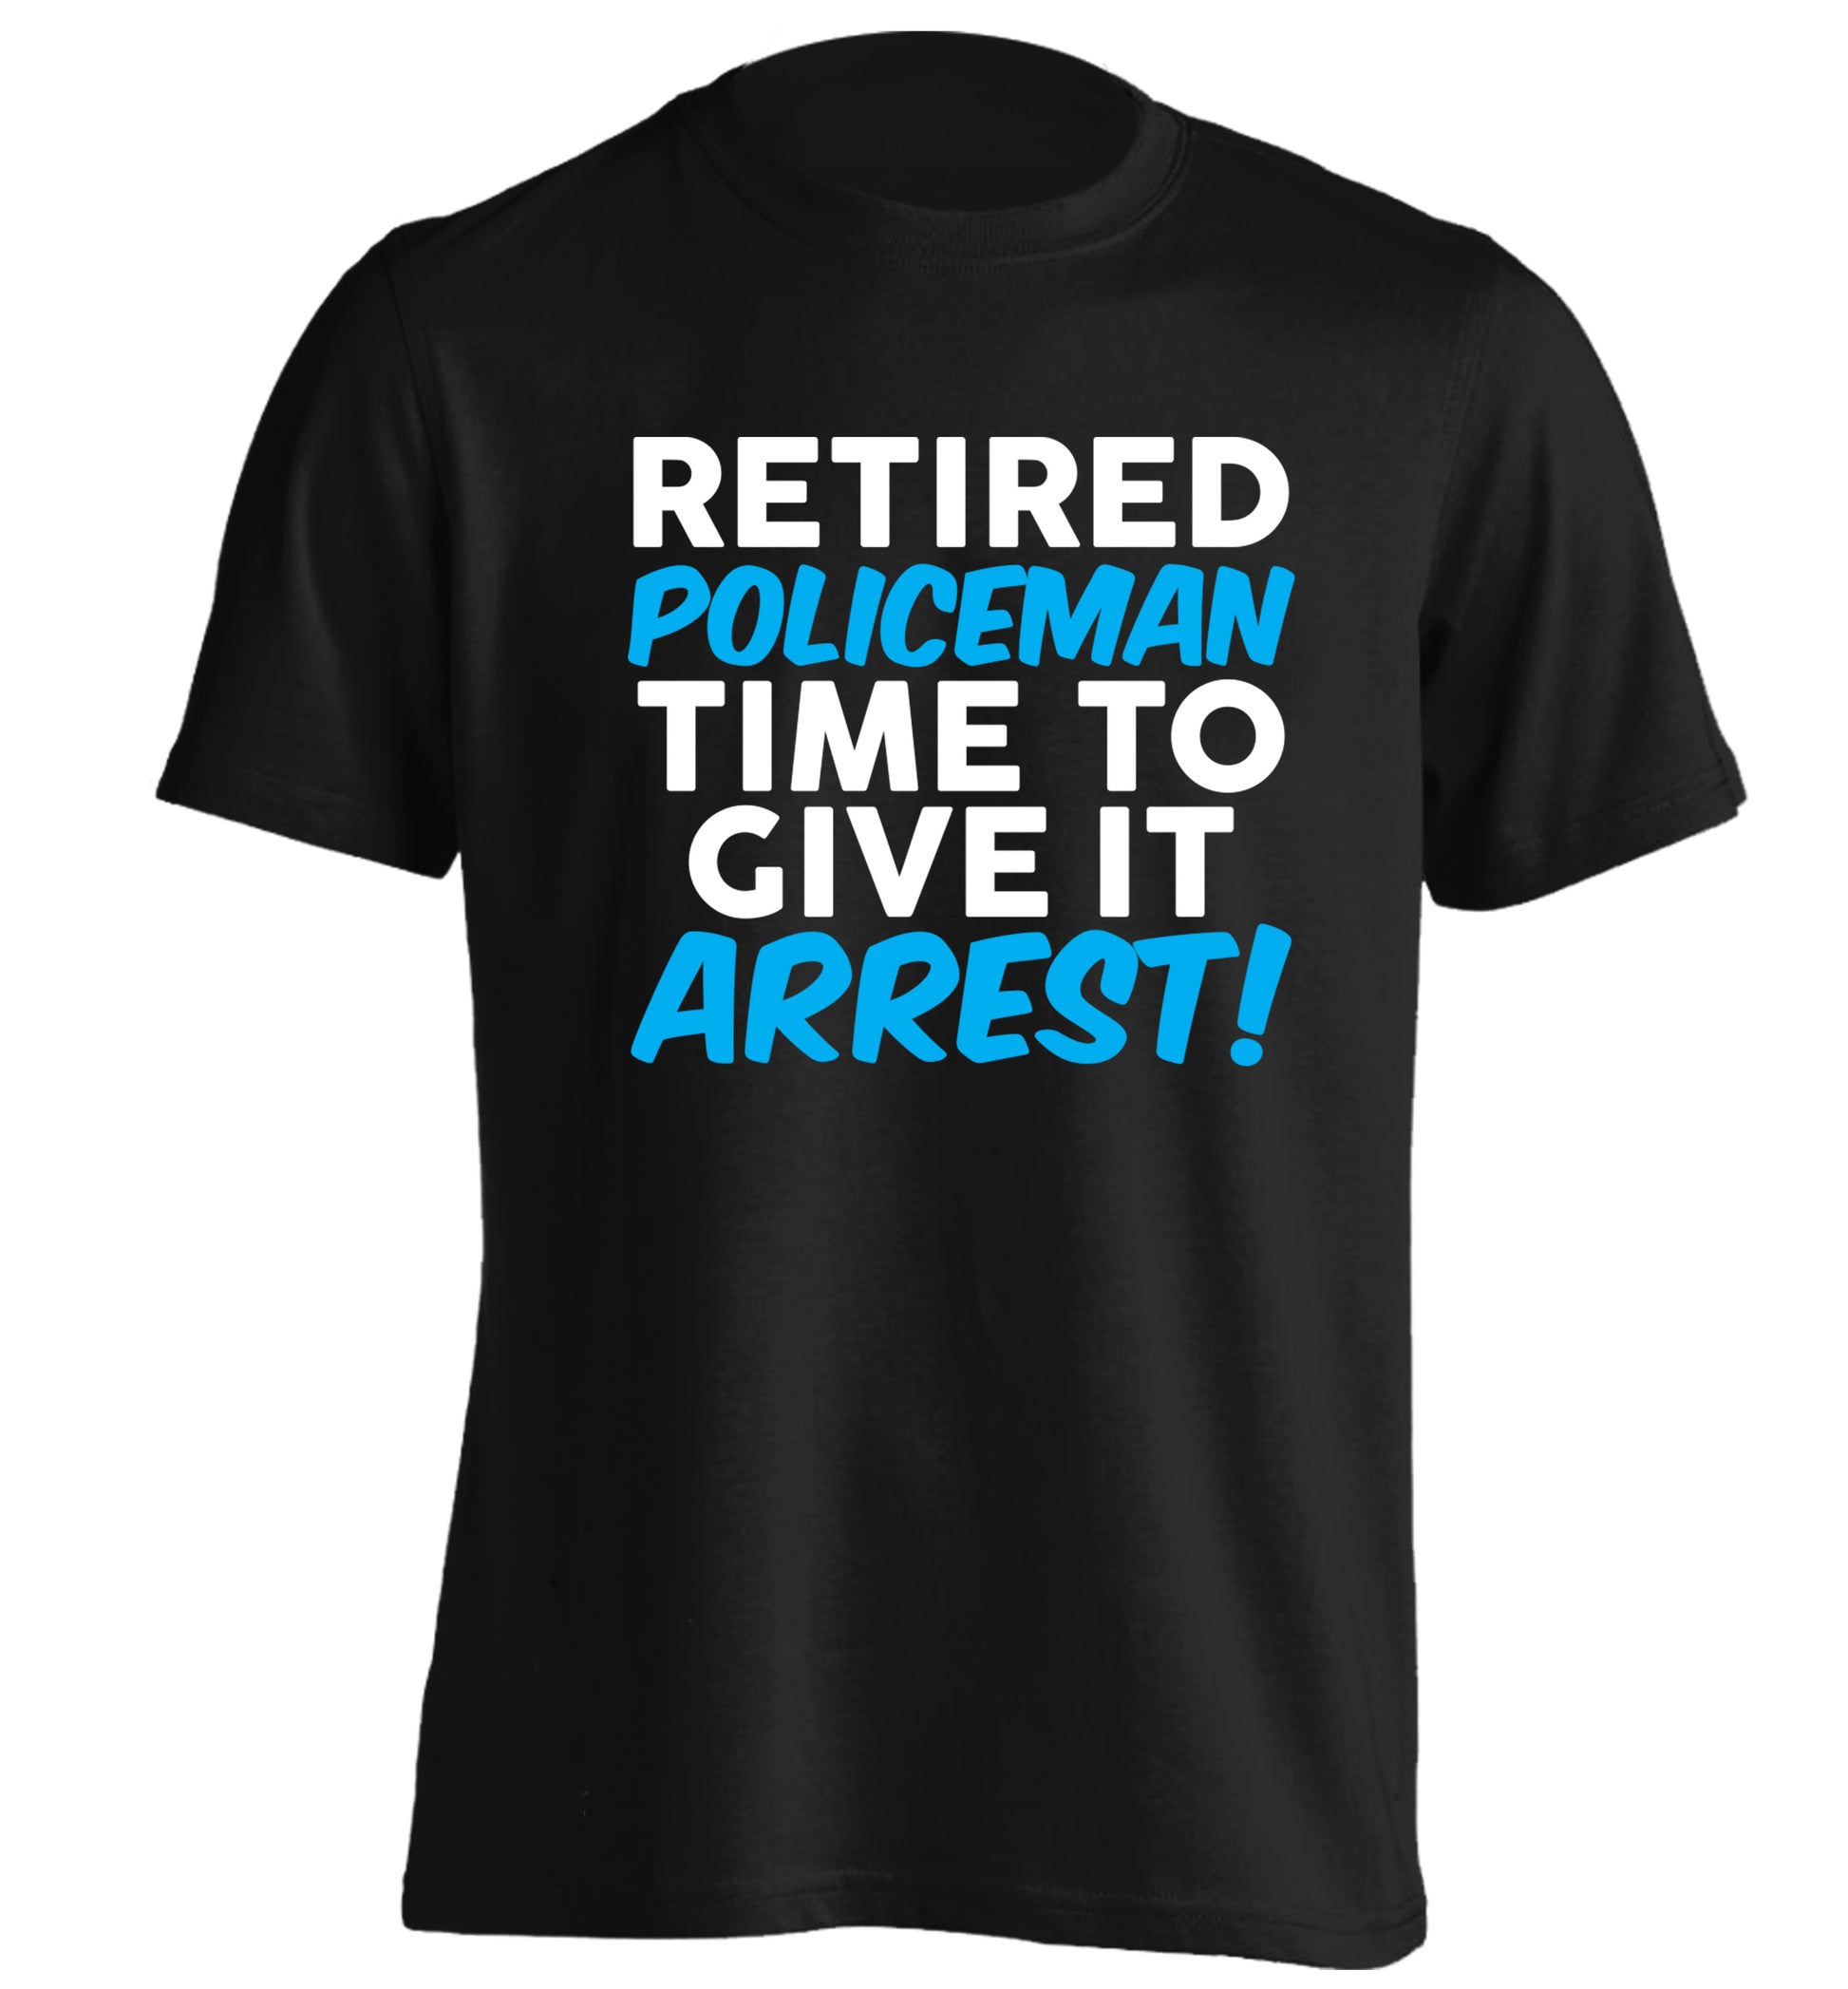 Retired policeman give it arresst! adults unisex black Tshirt 2XL